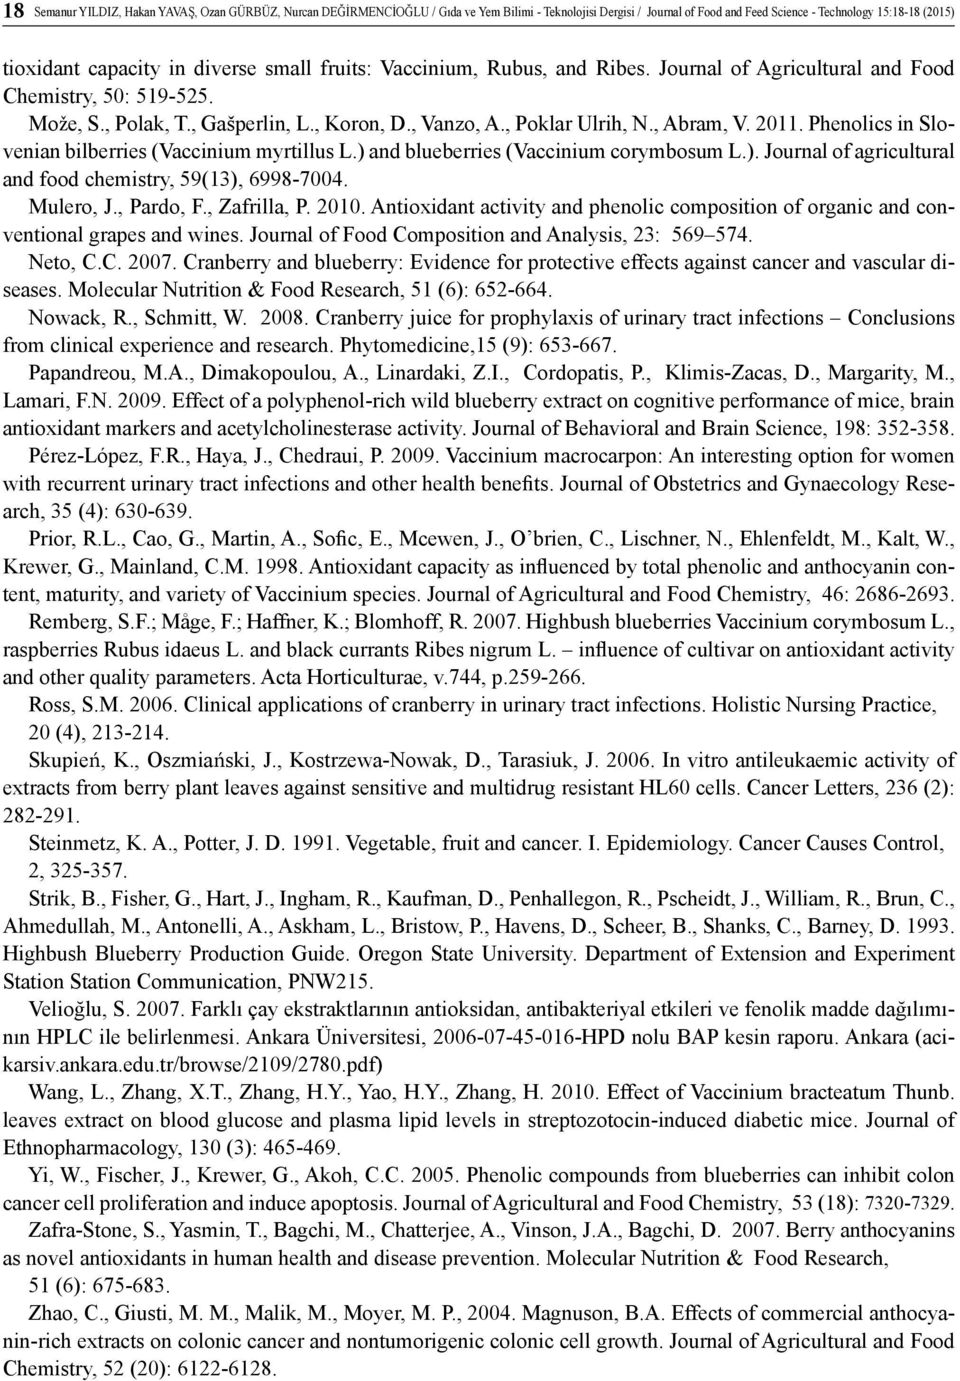 Phenolics in Slovenian bilberries (Vaccinium myrtillus L.) and blueberries (Vaccinium corymbosum L.). Journal of agricultural and food chemistry, 59(13), 6998-7004. Mulero, J., Pardo, F., Zafrilla, P.